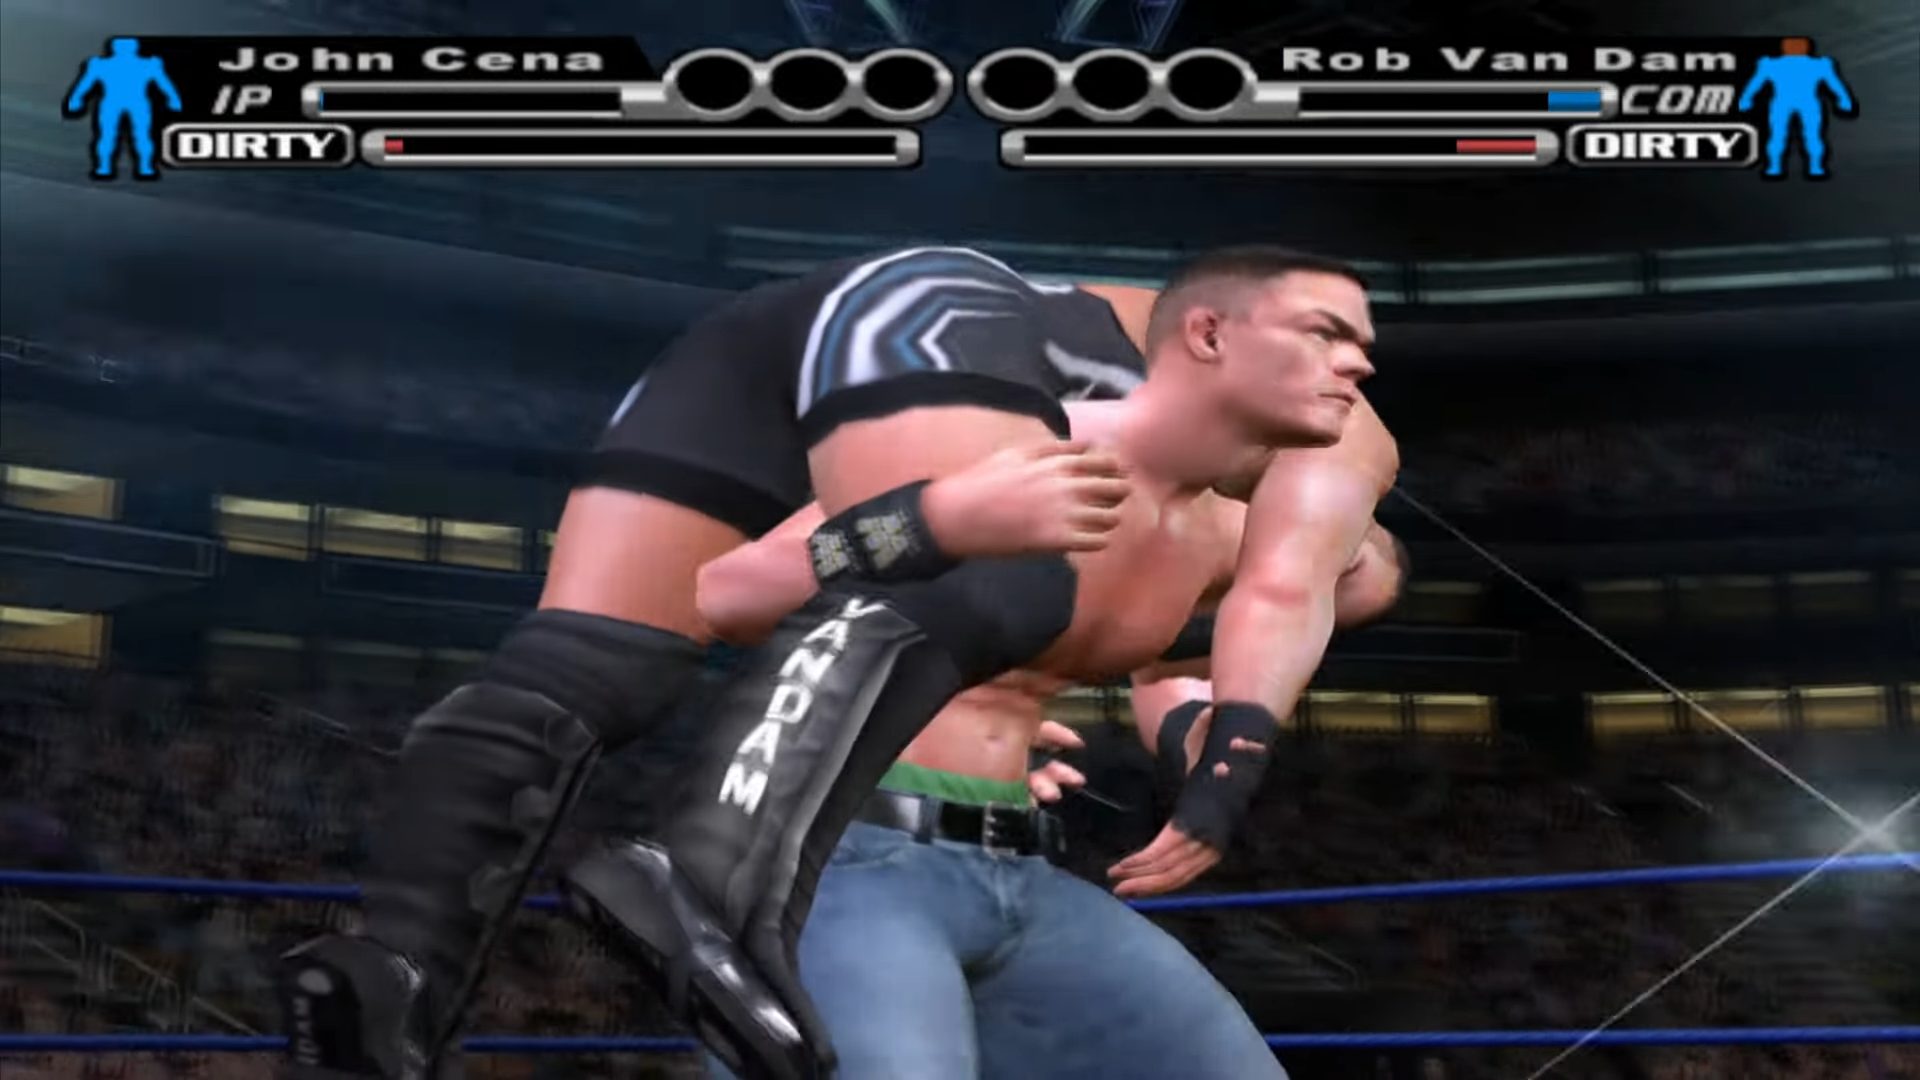 WWE SmackDown! vs. Raw (USA) ISO < PS2 ISOs